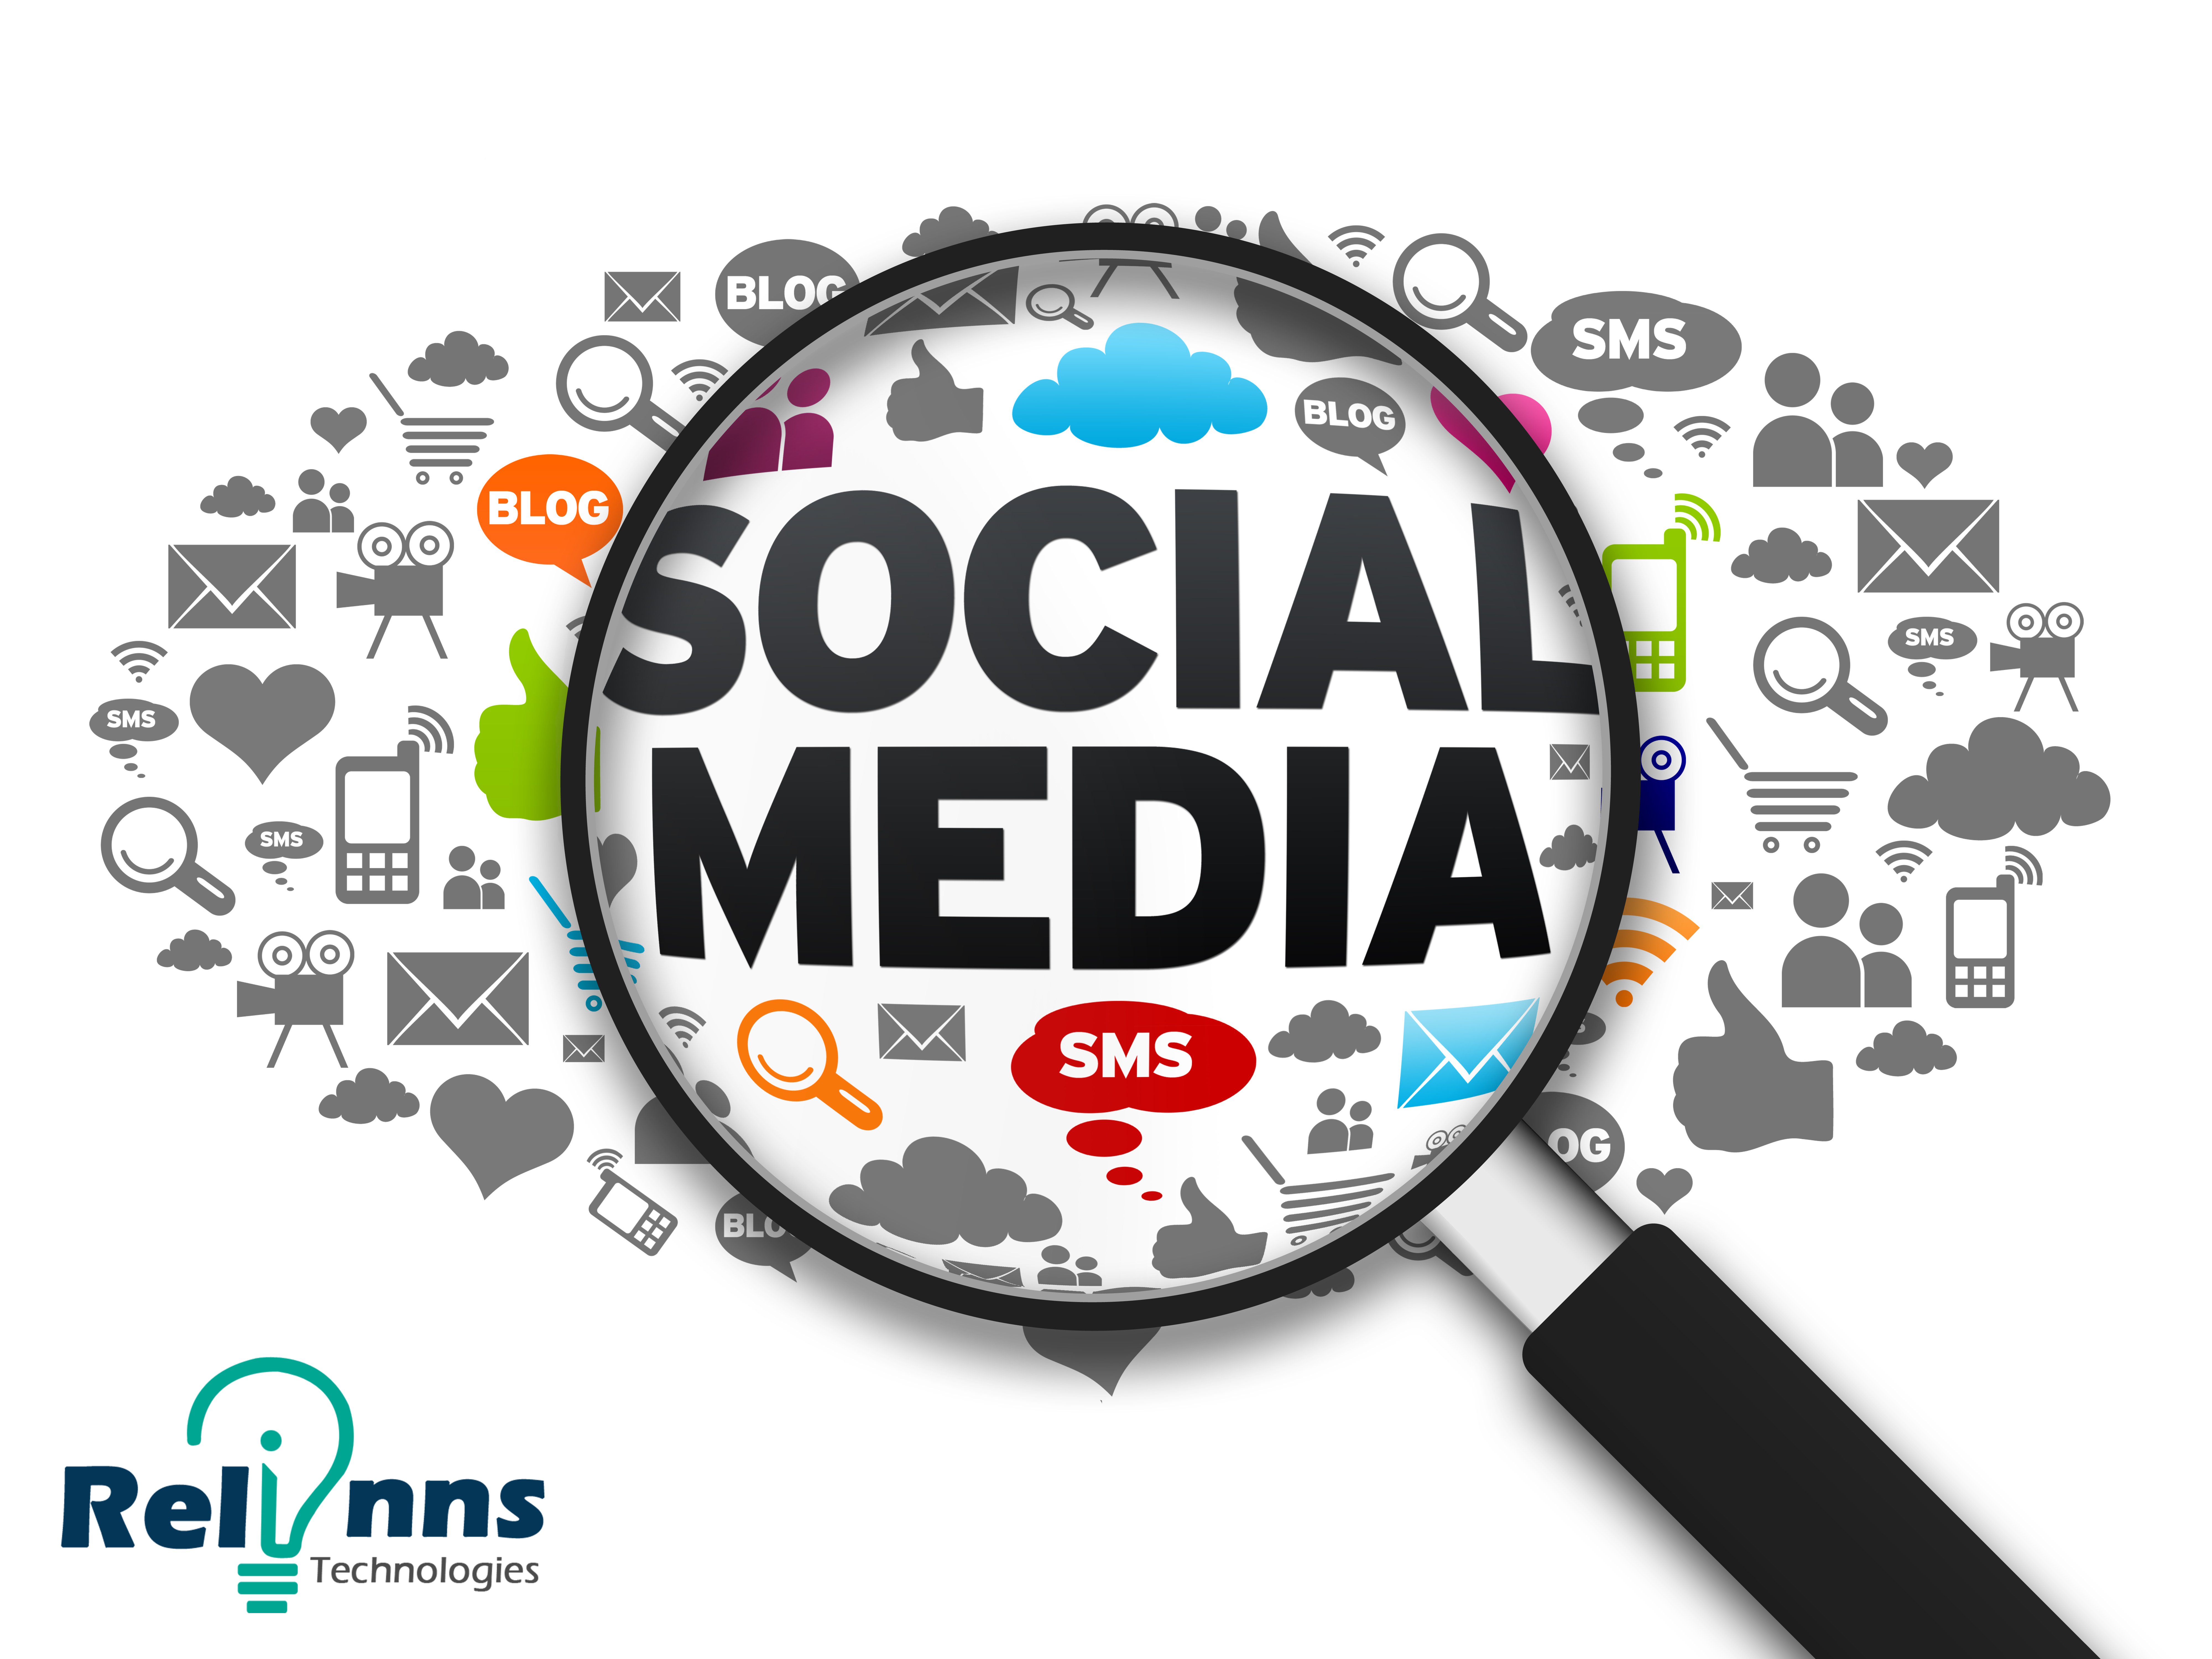 Impact of Social Media Marketing